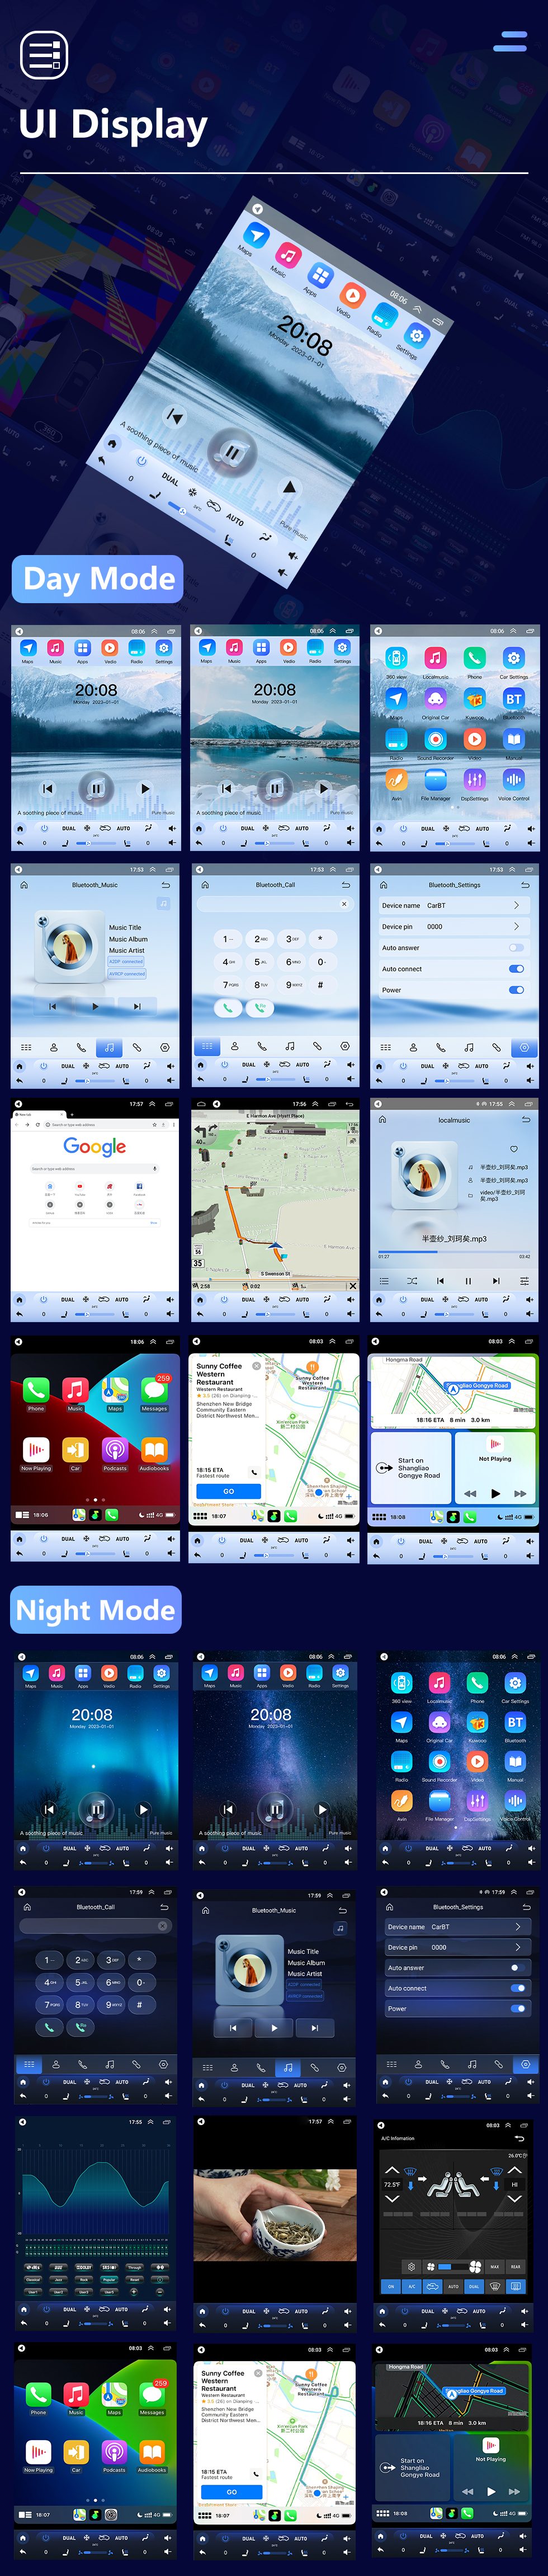 Seicane OEM 9,7-дюймовый Android 10.0 2015-2017 Great Wall Haval H9 GPS-навигация Радио с сенсорным экраном Поддержка Bluetooth WIFI TPMS Carplay DAB+